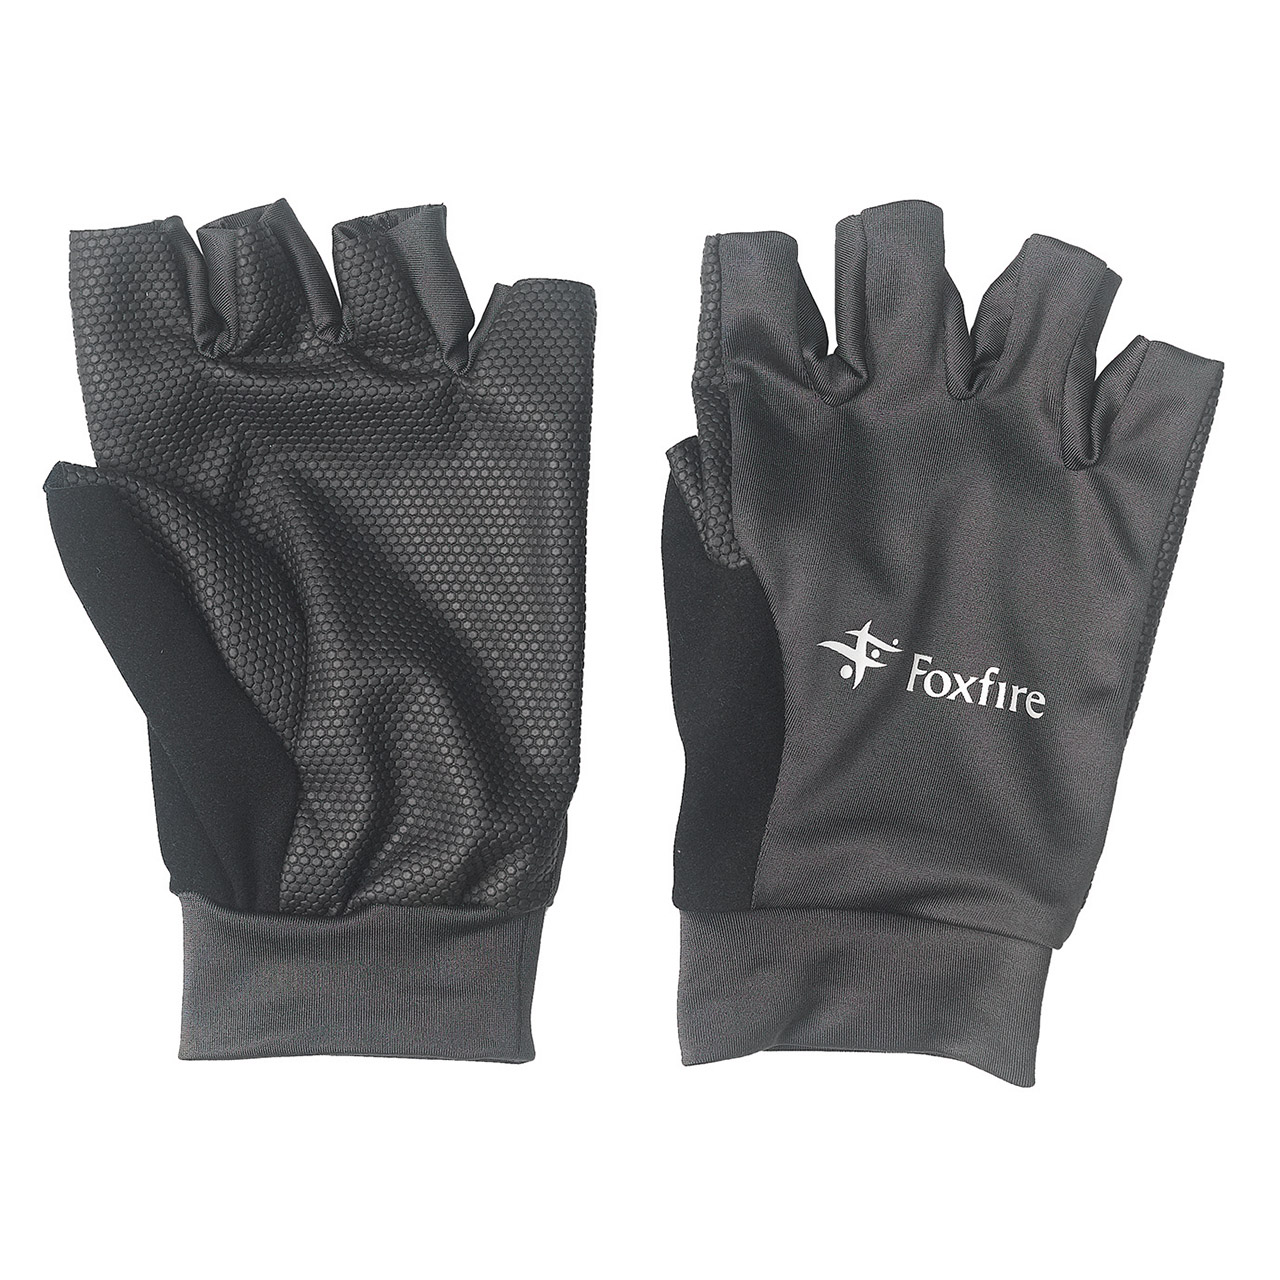 Foxfire   ノンスキッドグラブ Non-Skid Gloves